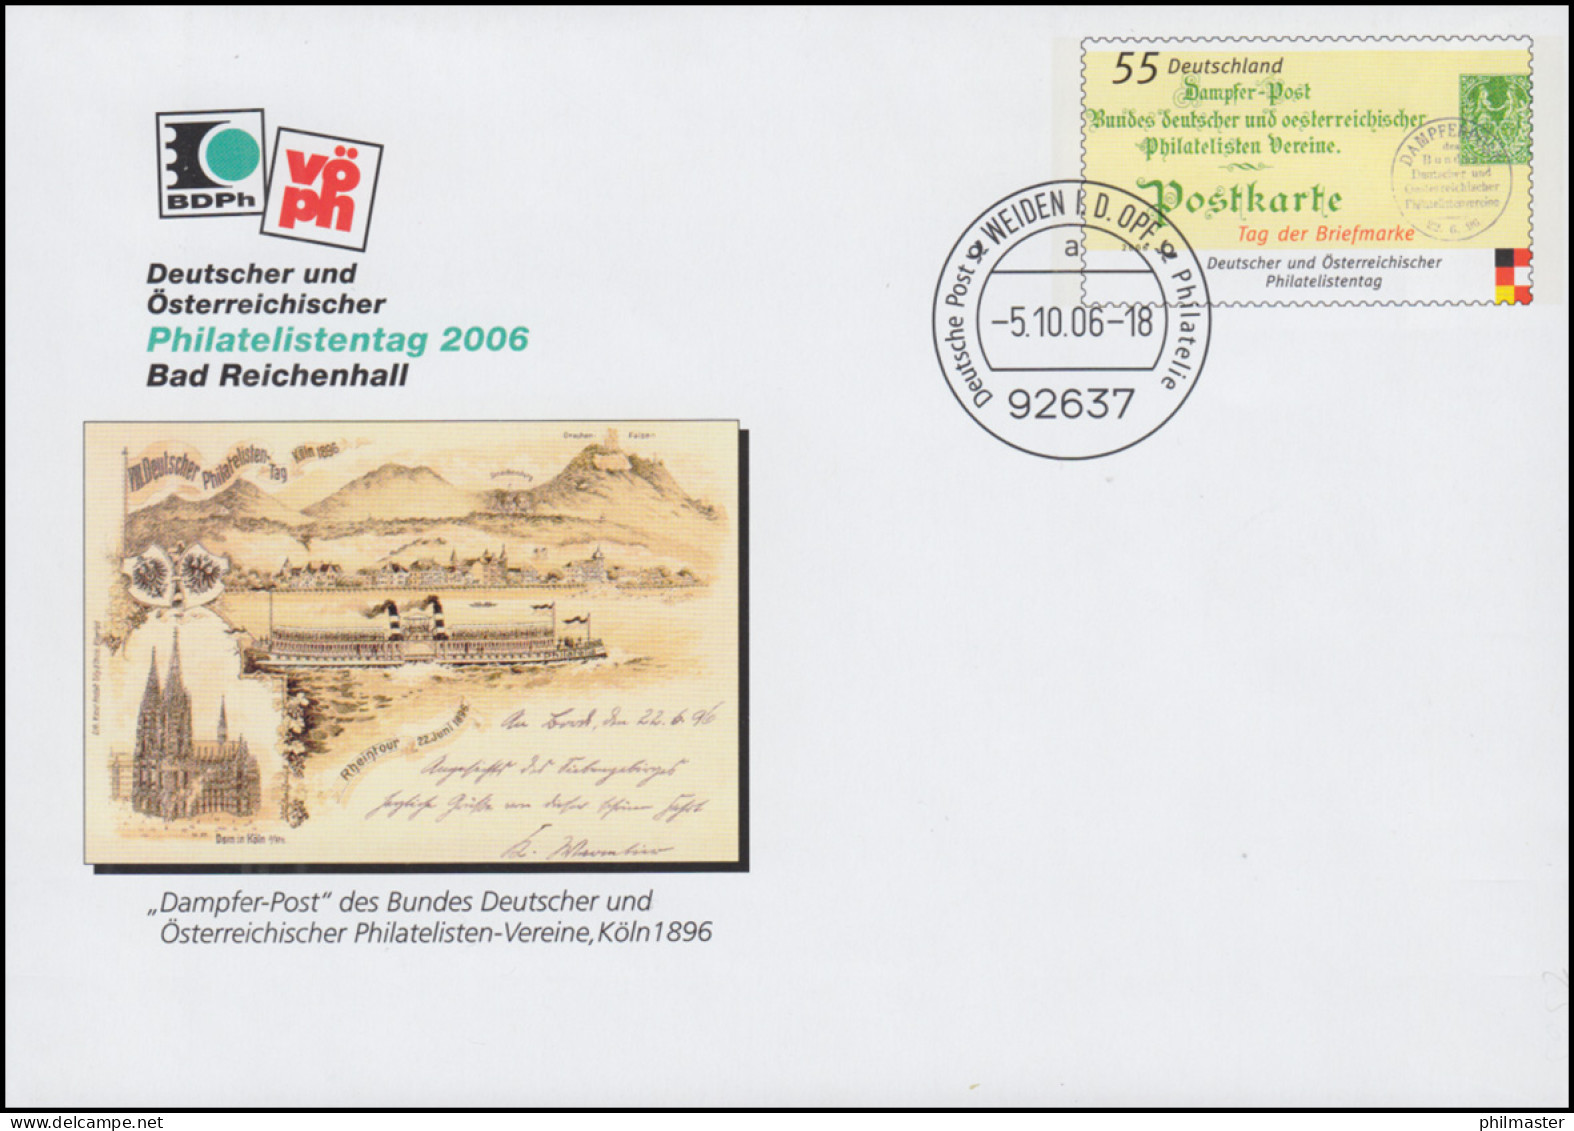 USo 122 Philatelistentag Bad Reichenhall - Dampferpost 2006, VS-O Weiden 5.10.06 - Covers - Mint